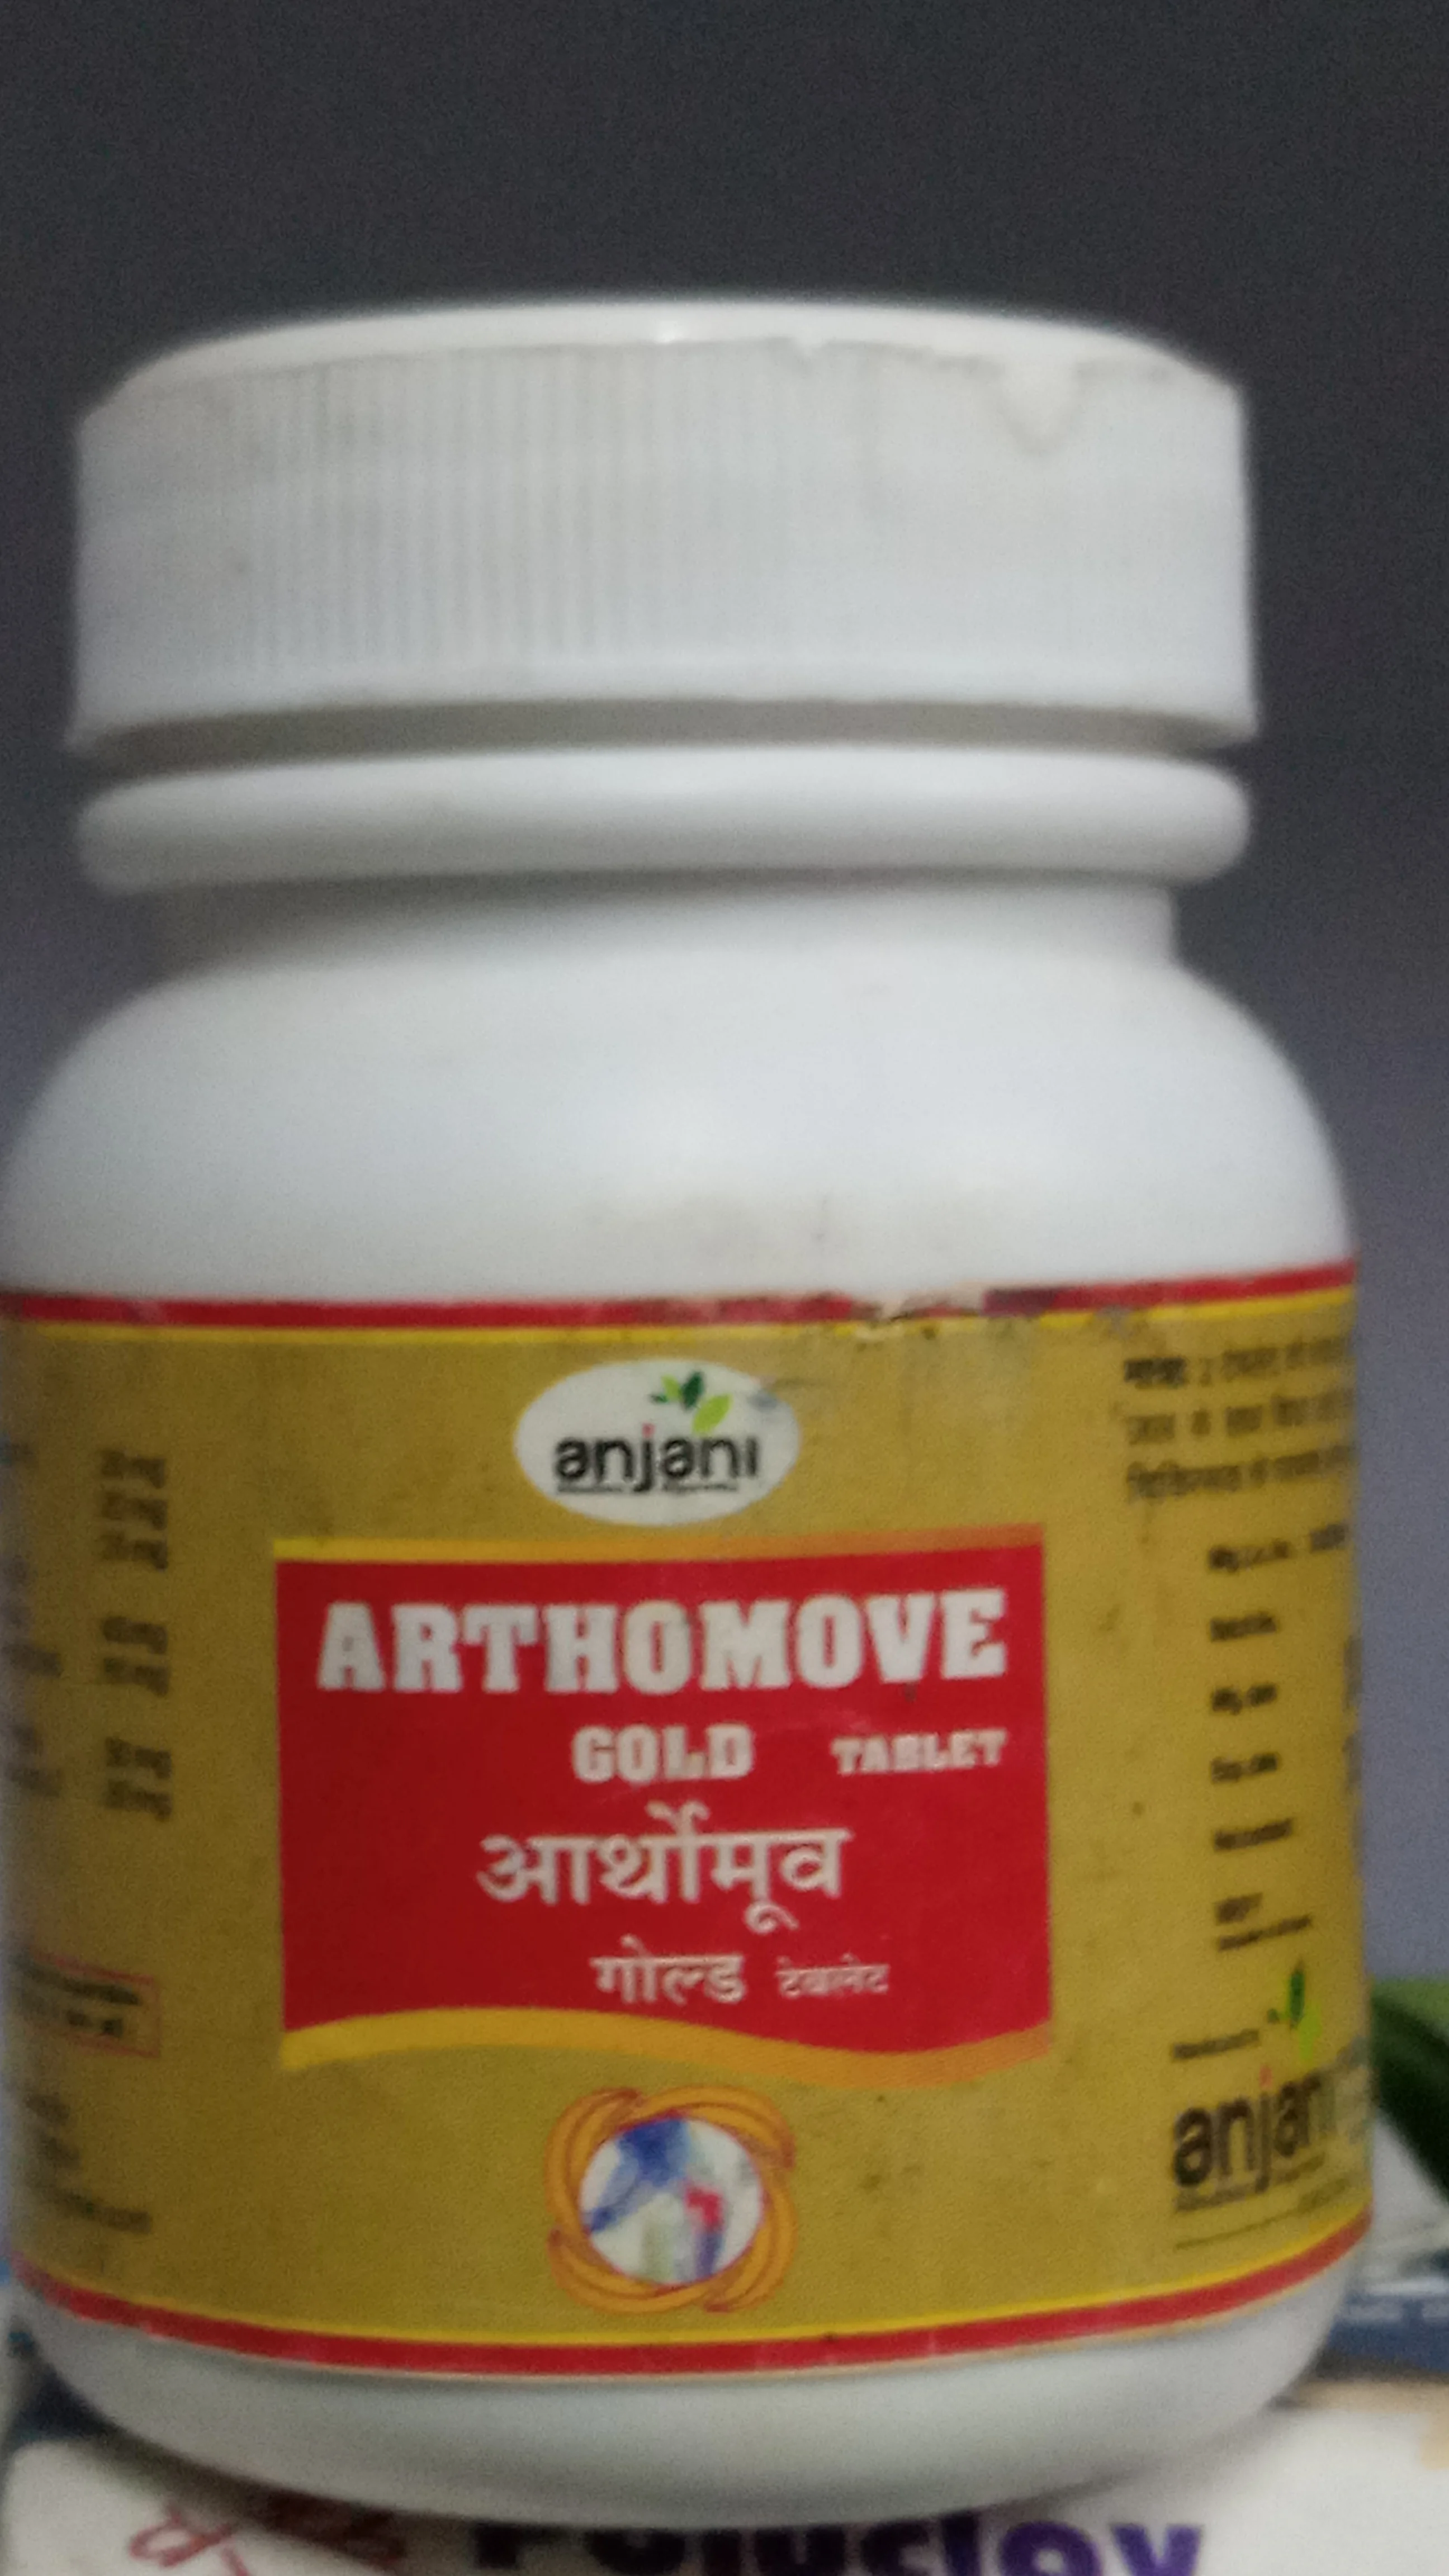 arthomove gold tablet 30 tab upto 20% off anjani pharmaceuticals